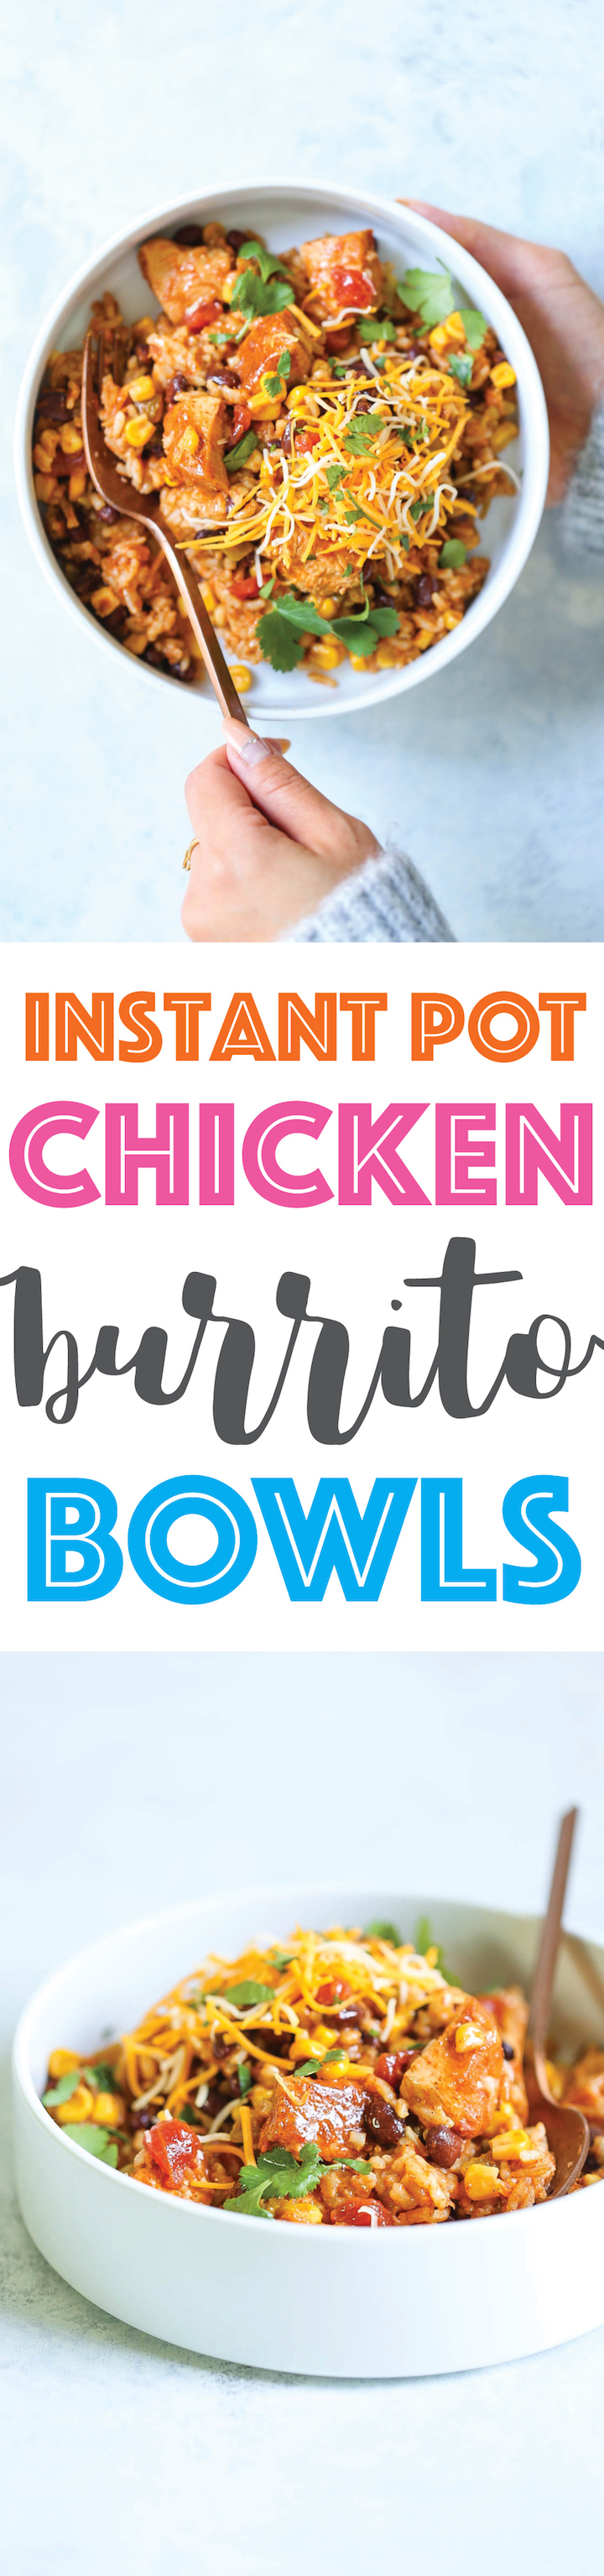 https://s23209.pcdn.co/wp-content/uploads/2018/02/Instant-Pot-Chicken-Burrito-Bowls.jpg